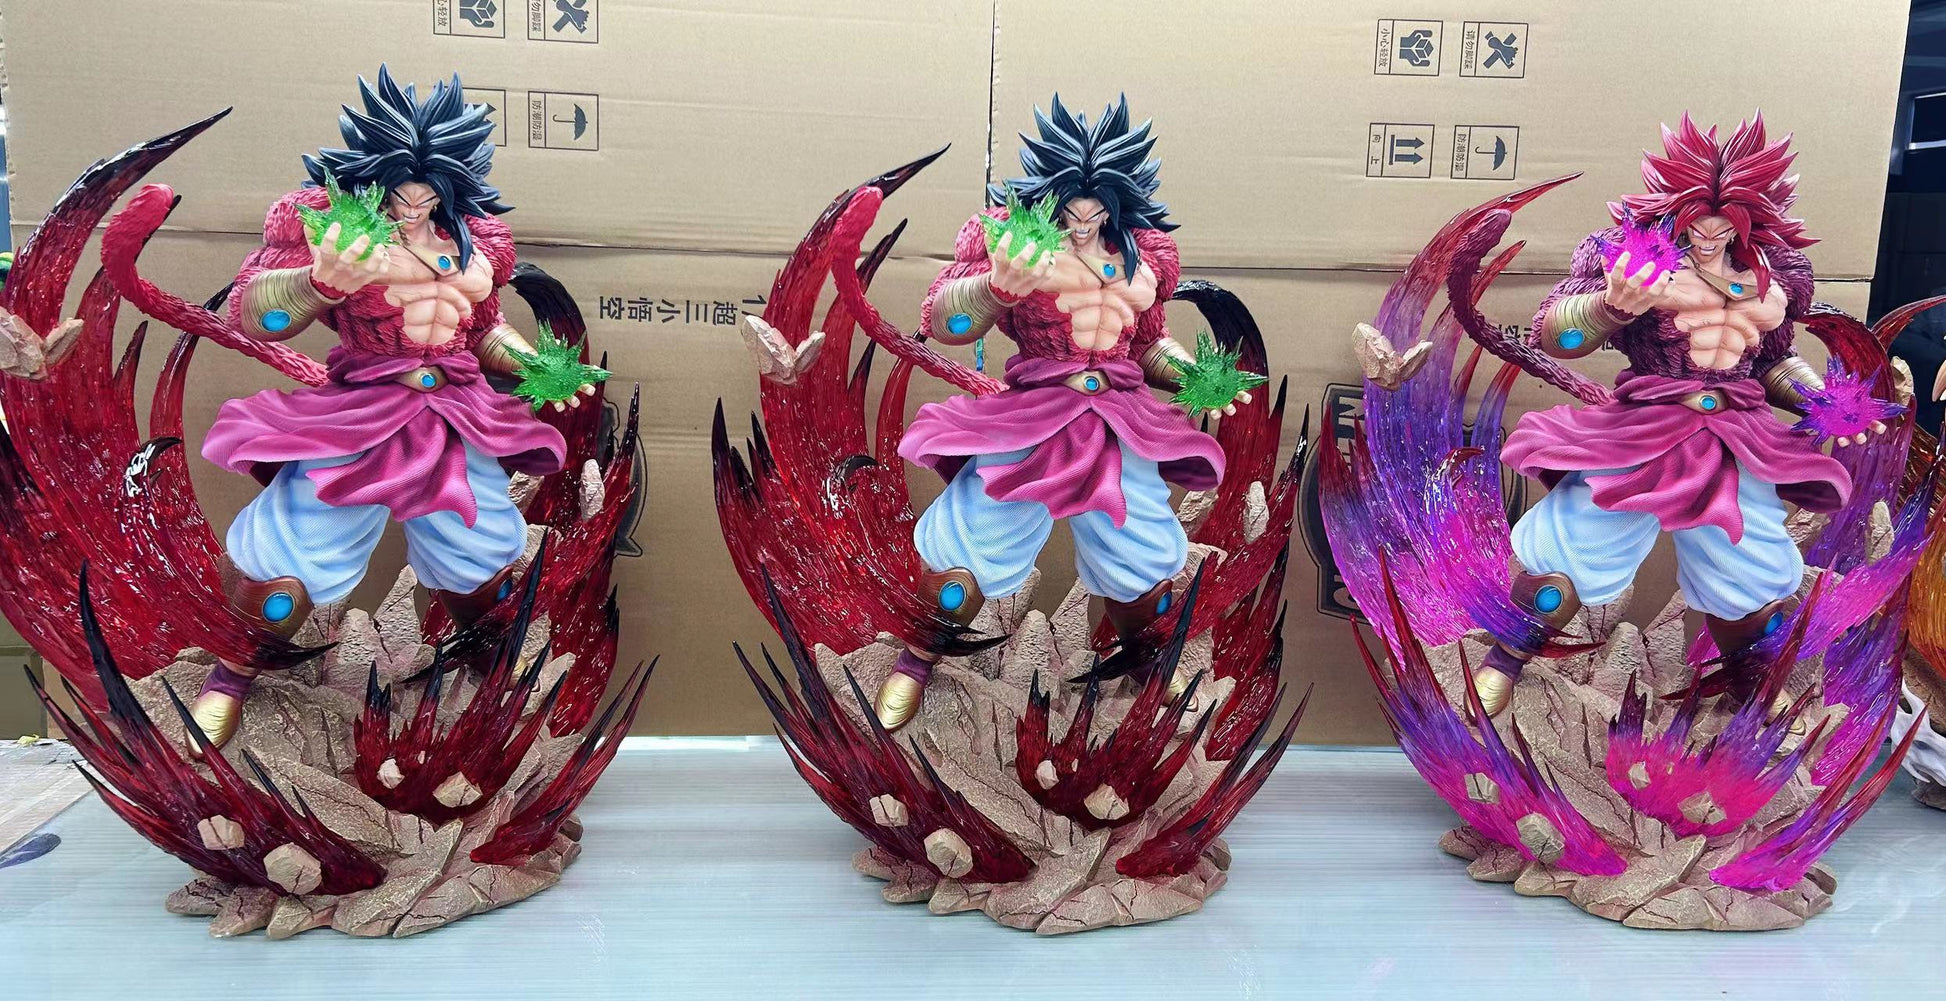 PRE-ORDER kylin Studio - Dragon Ball #7 Super Saiyan 4 Broly 1/6 Statue(GK)